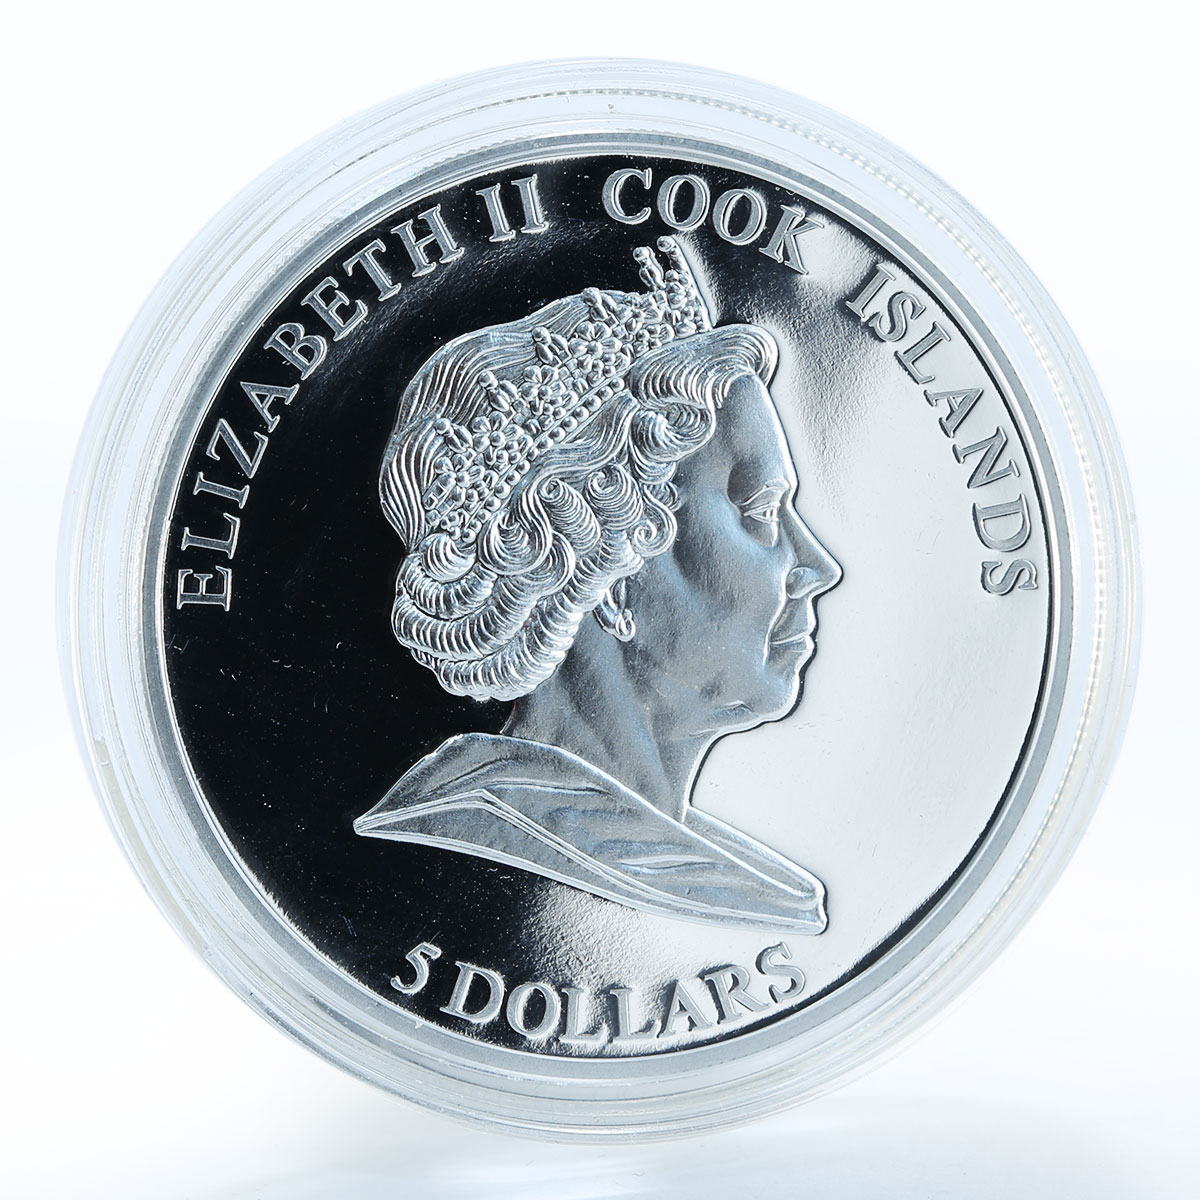 Cook Islands $5 12 wonders National Reserve Khortytsia 1 Oz Silver Coin 2009